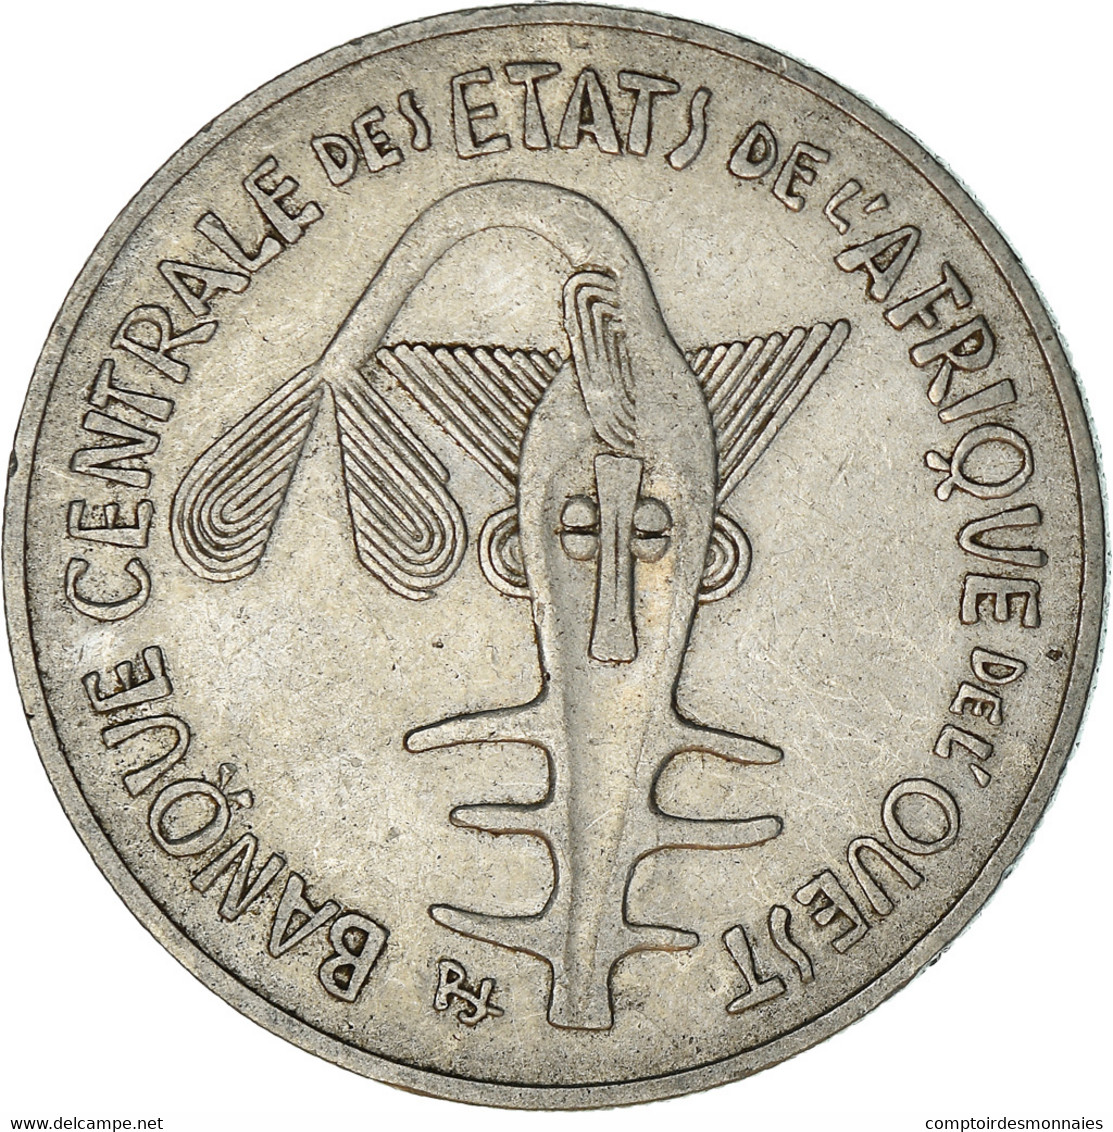 Monnaie, West African States, 100 Francs, 1982, Paris, TB, Nickel, KM:4 - Ivory Coast